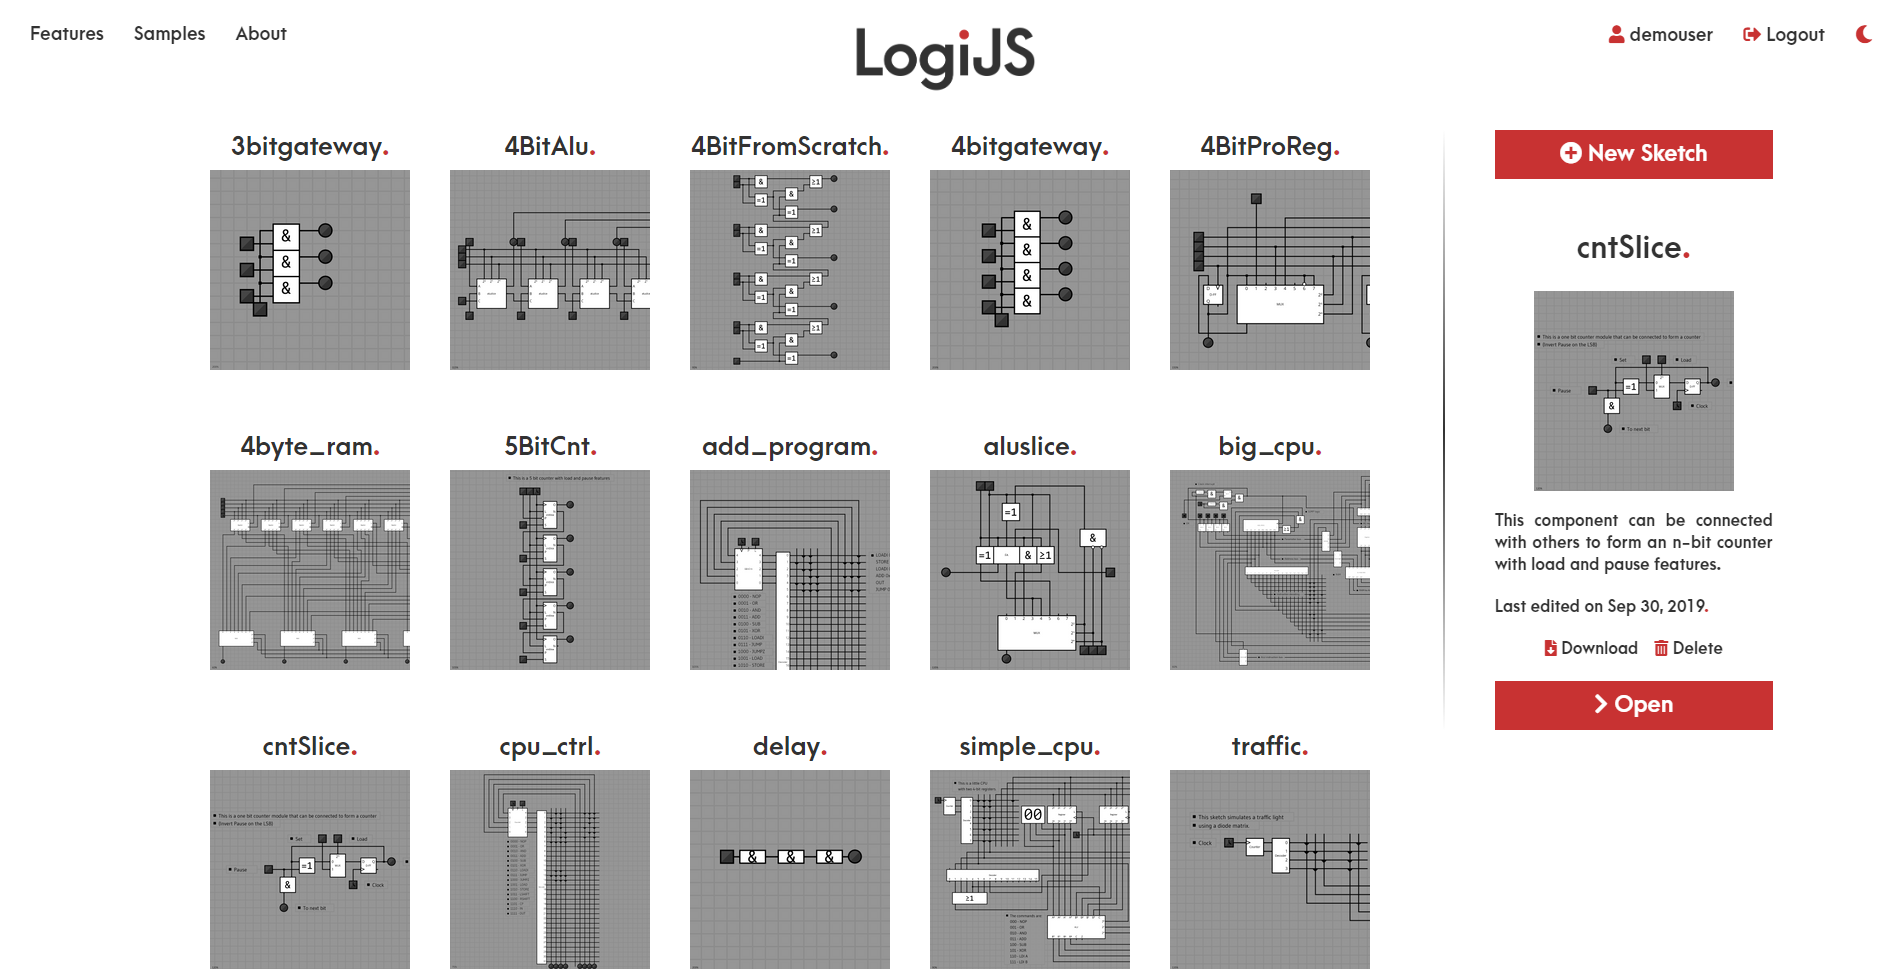 The LogiJS user dashboard